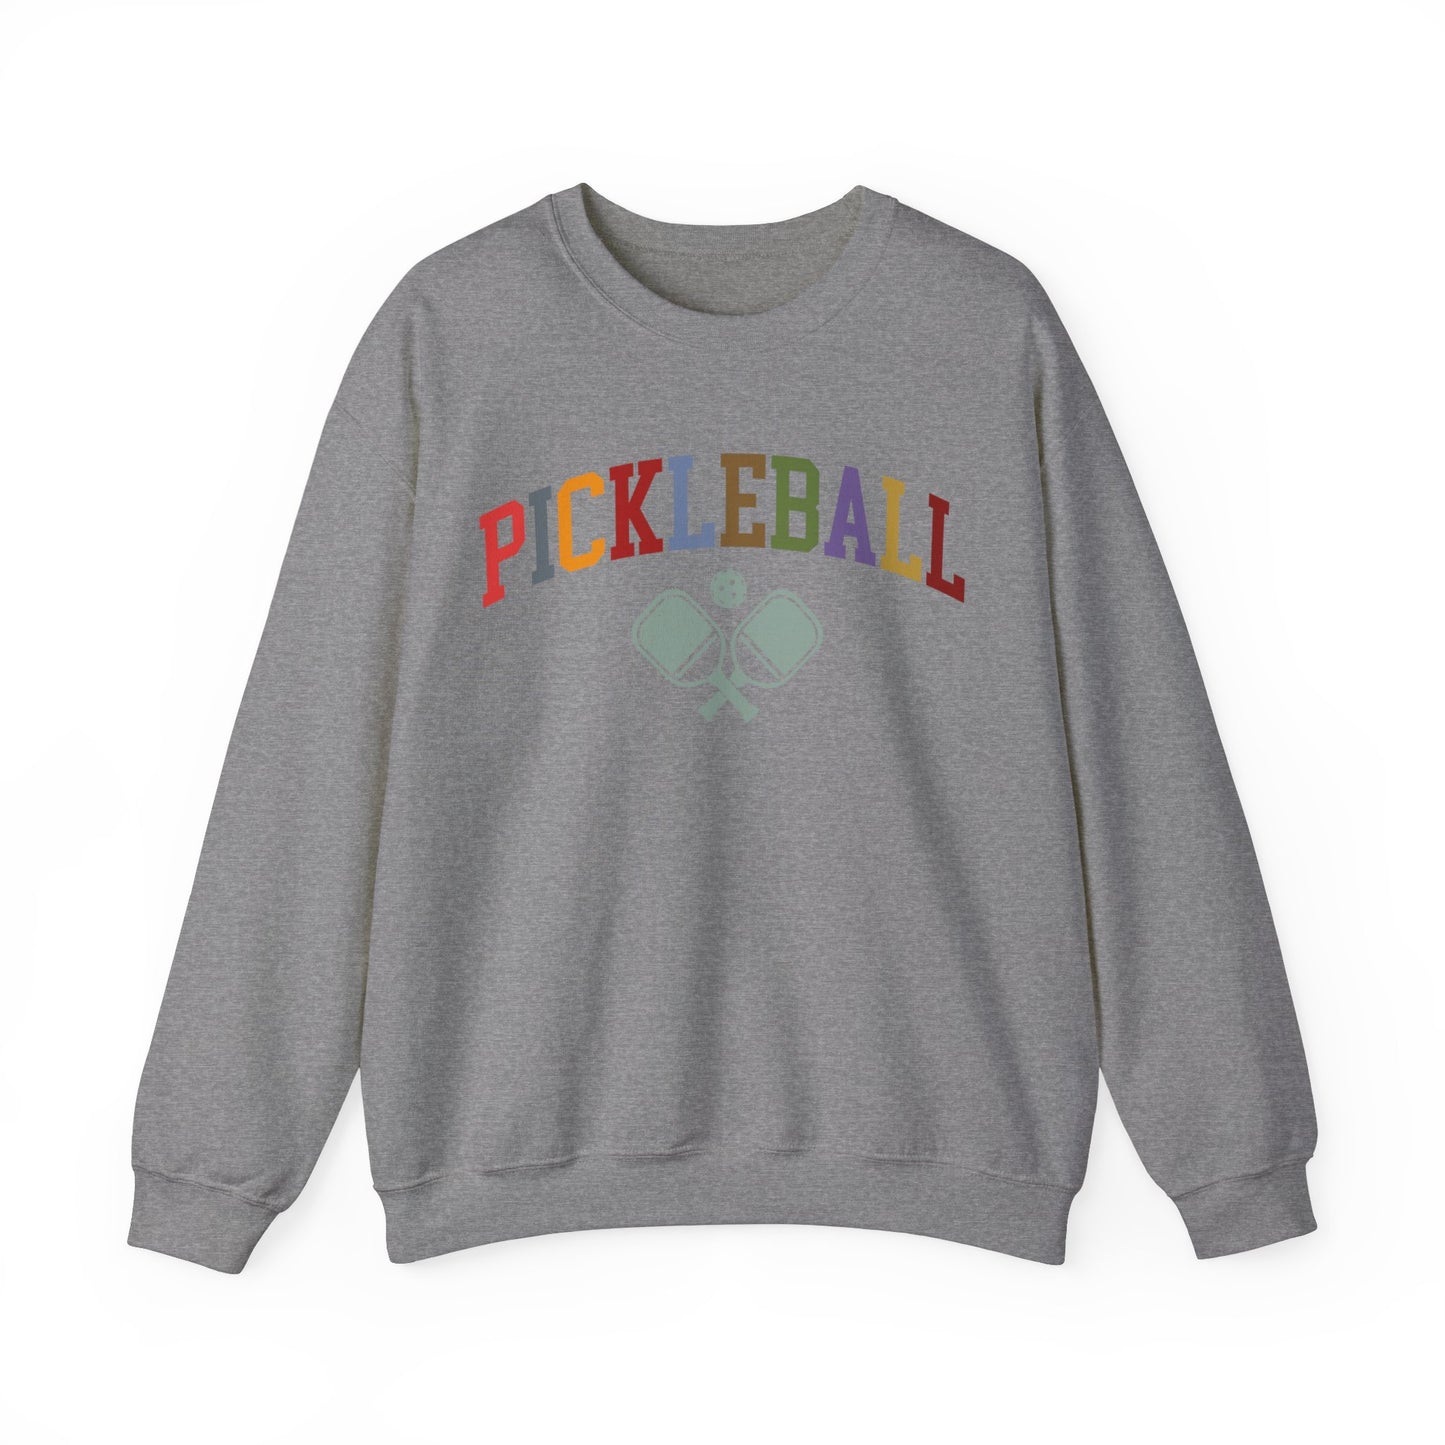 Play Pickleball Sweatshirt for Pickleball Player, Cute Pickleball Sweatshirt for Wife, Retro Pickleball Gift for Pickleball Lover, S1469